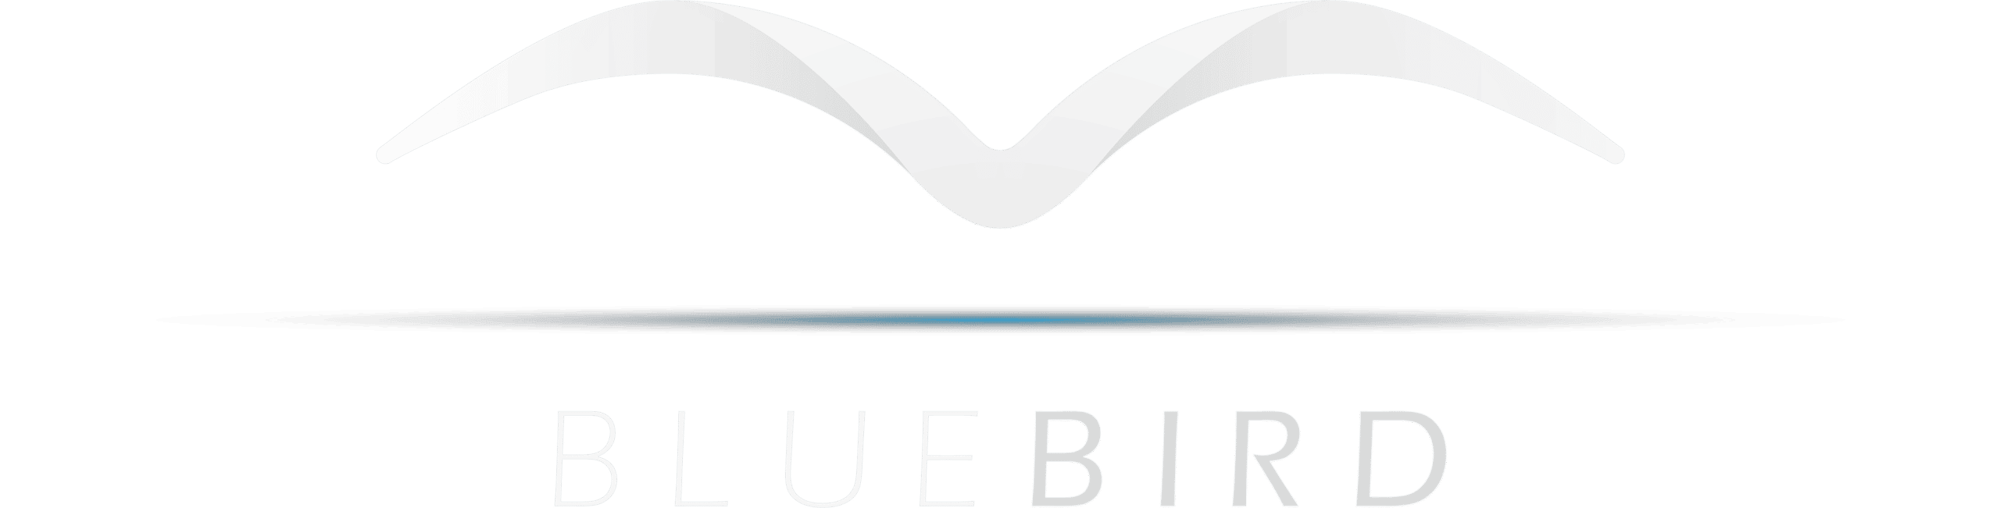 Bluebird Logo.